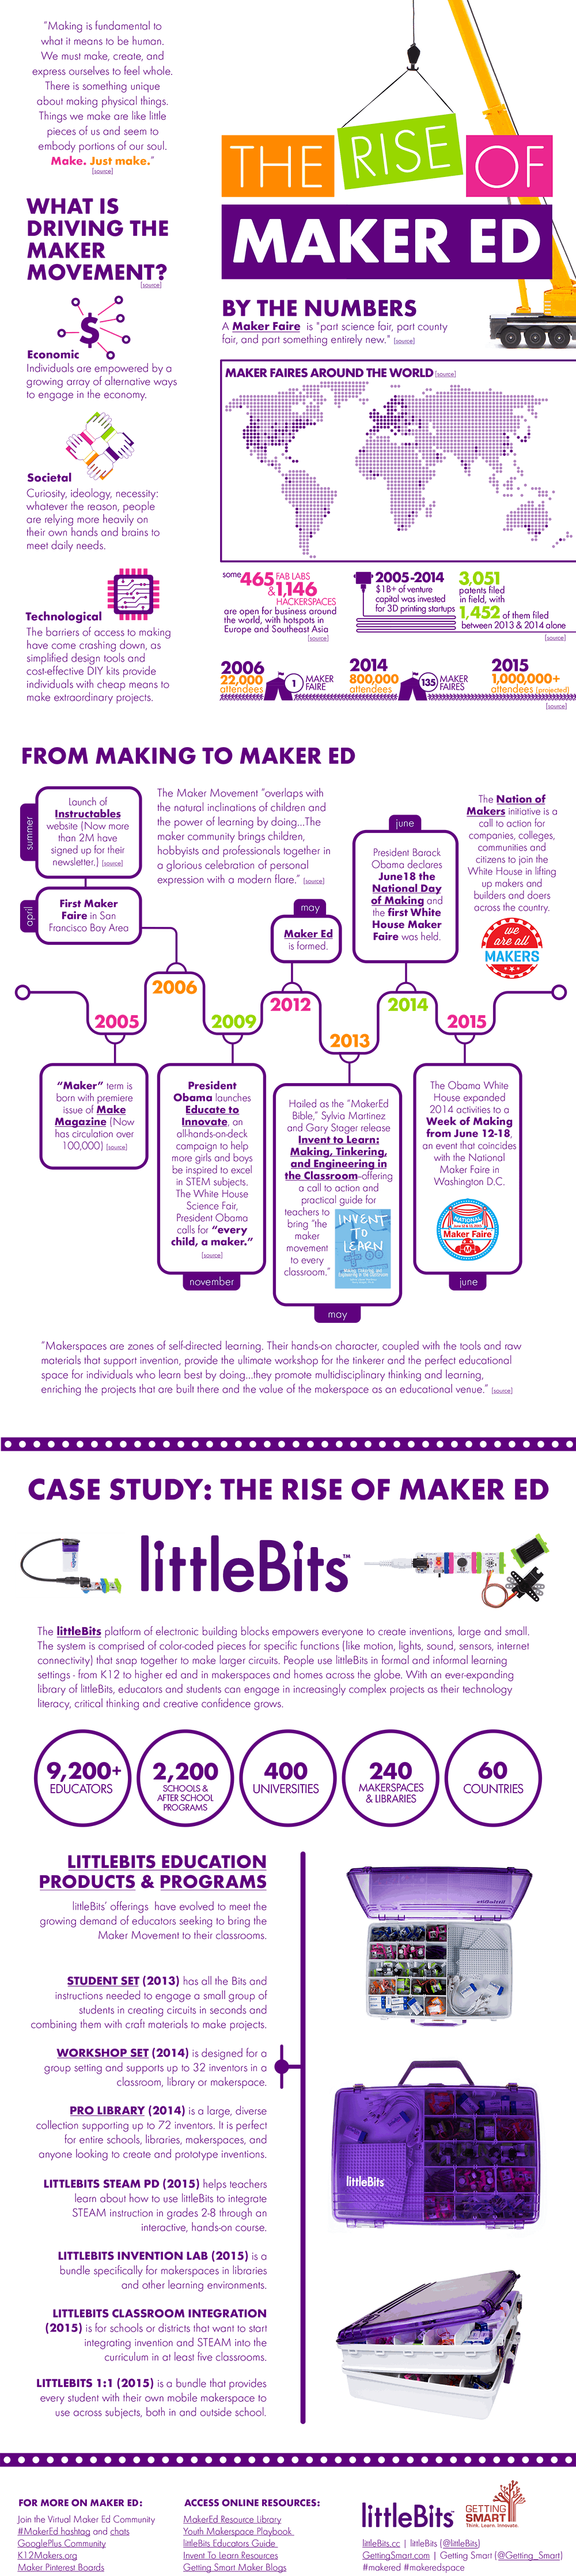 littleBits-GettingSmart infographic-Final-1000pxw